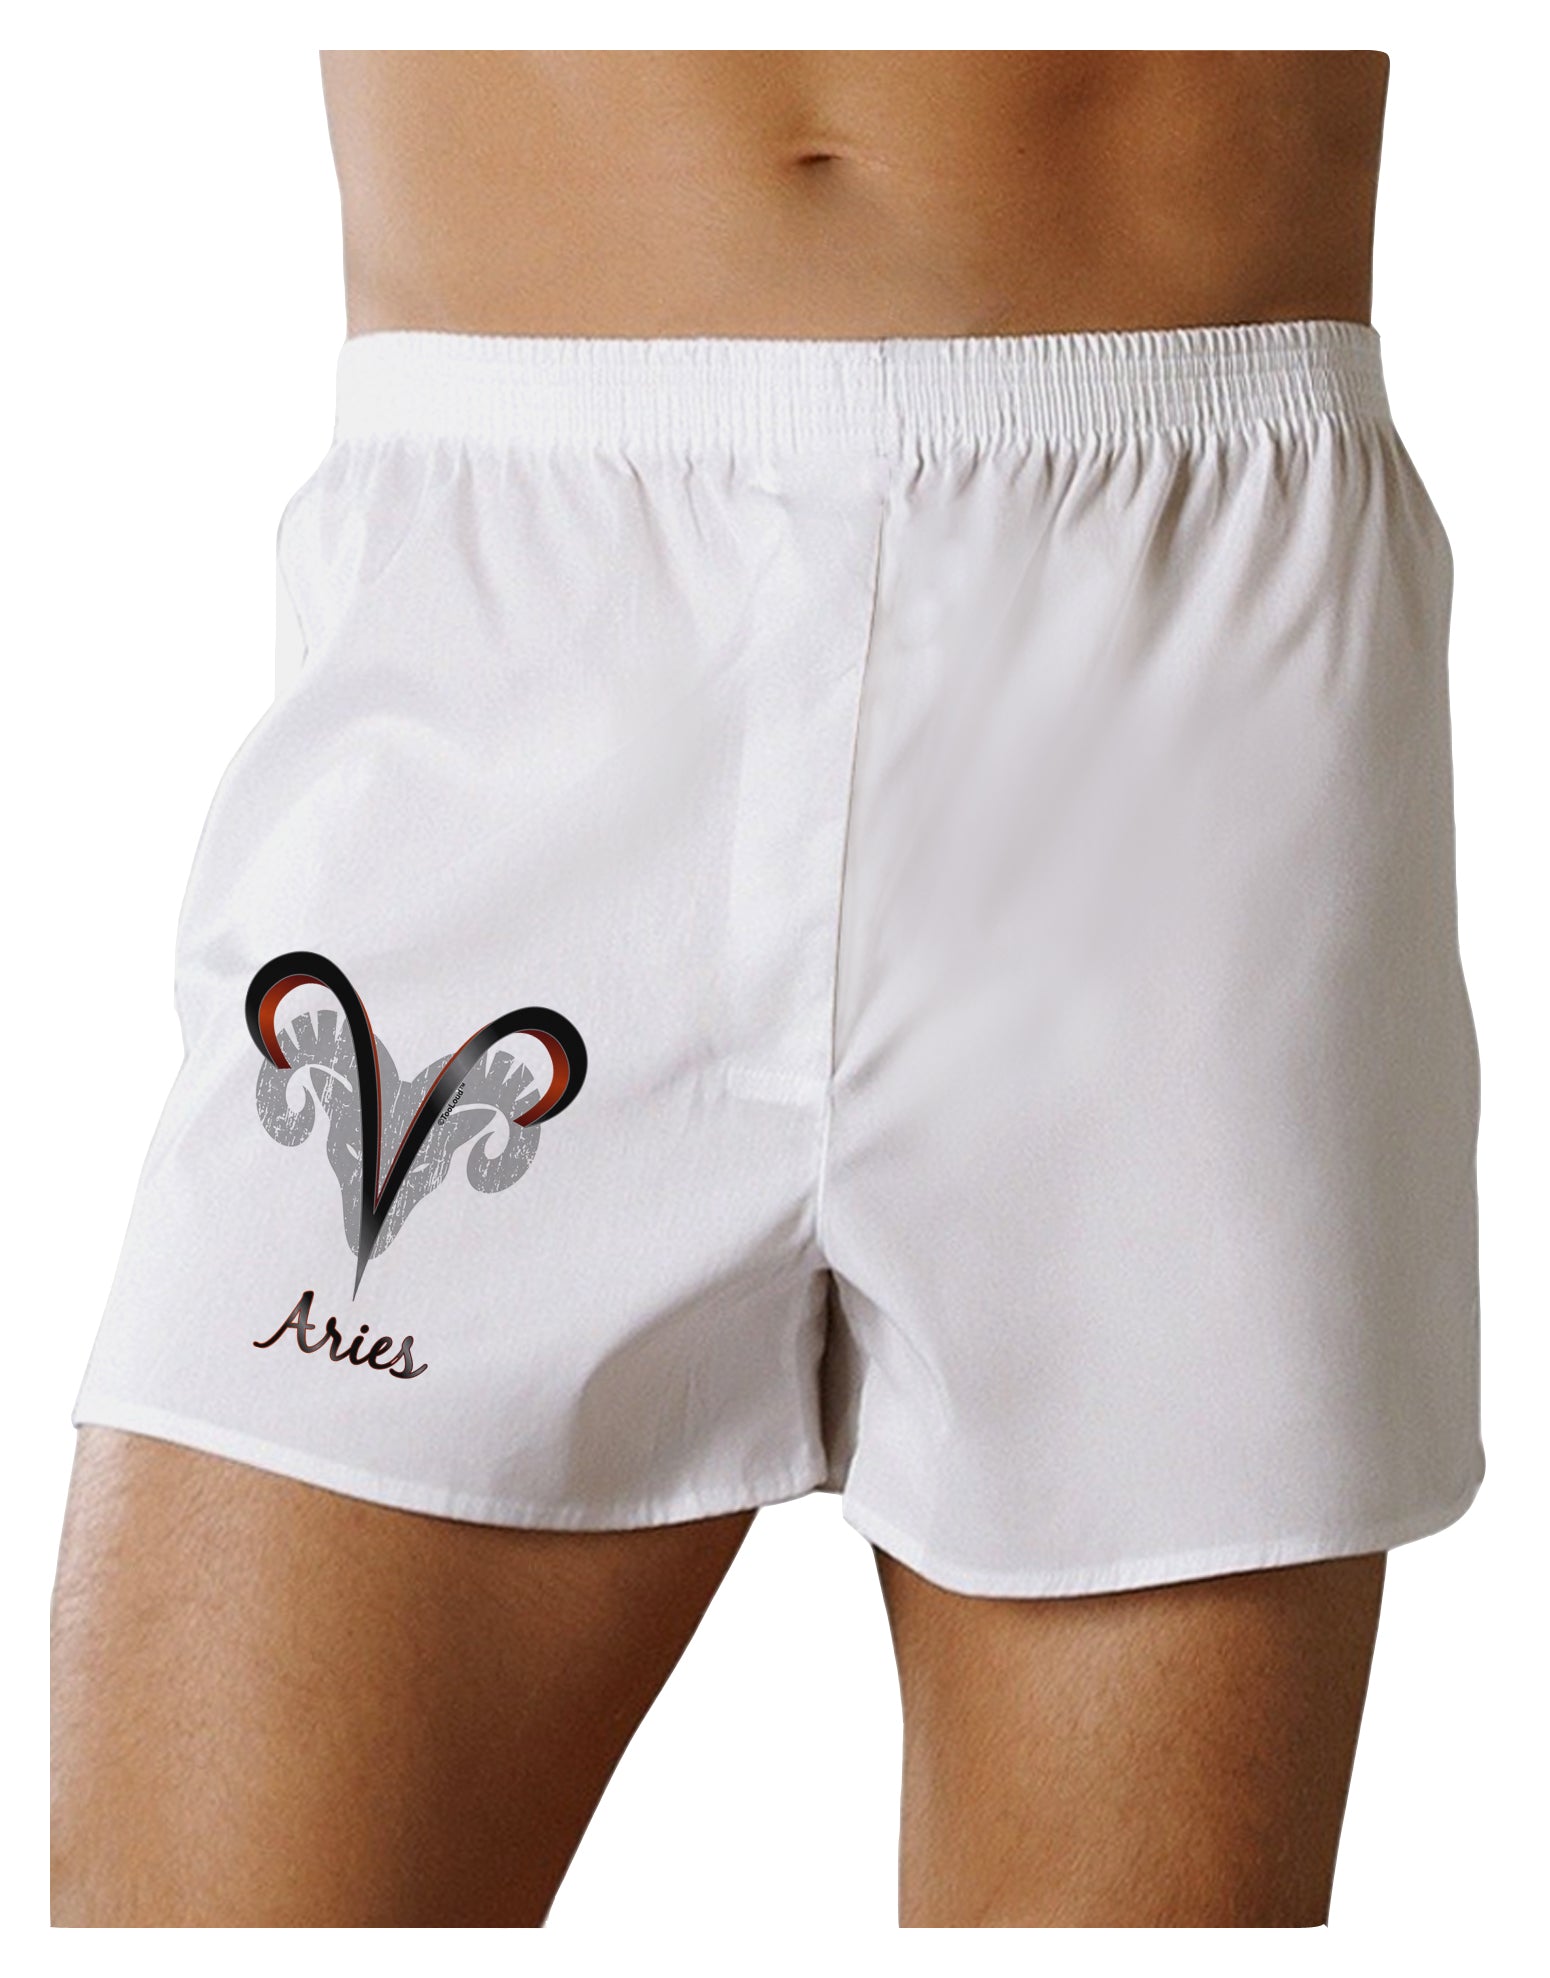 Aries Symbol Boxer Shorts